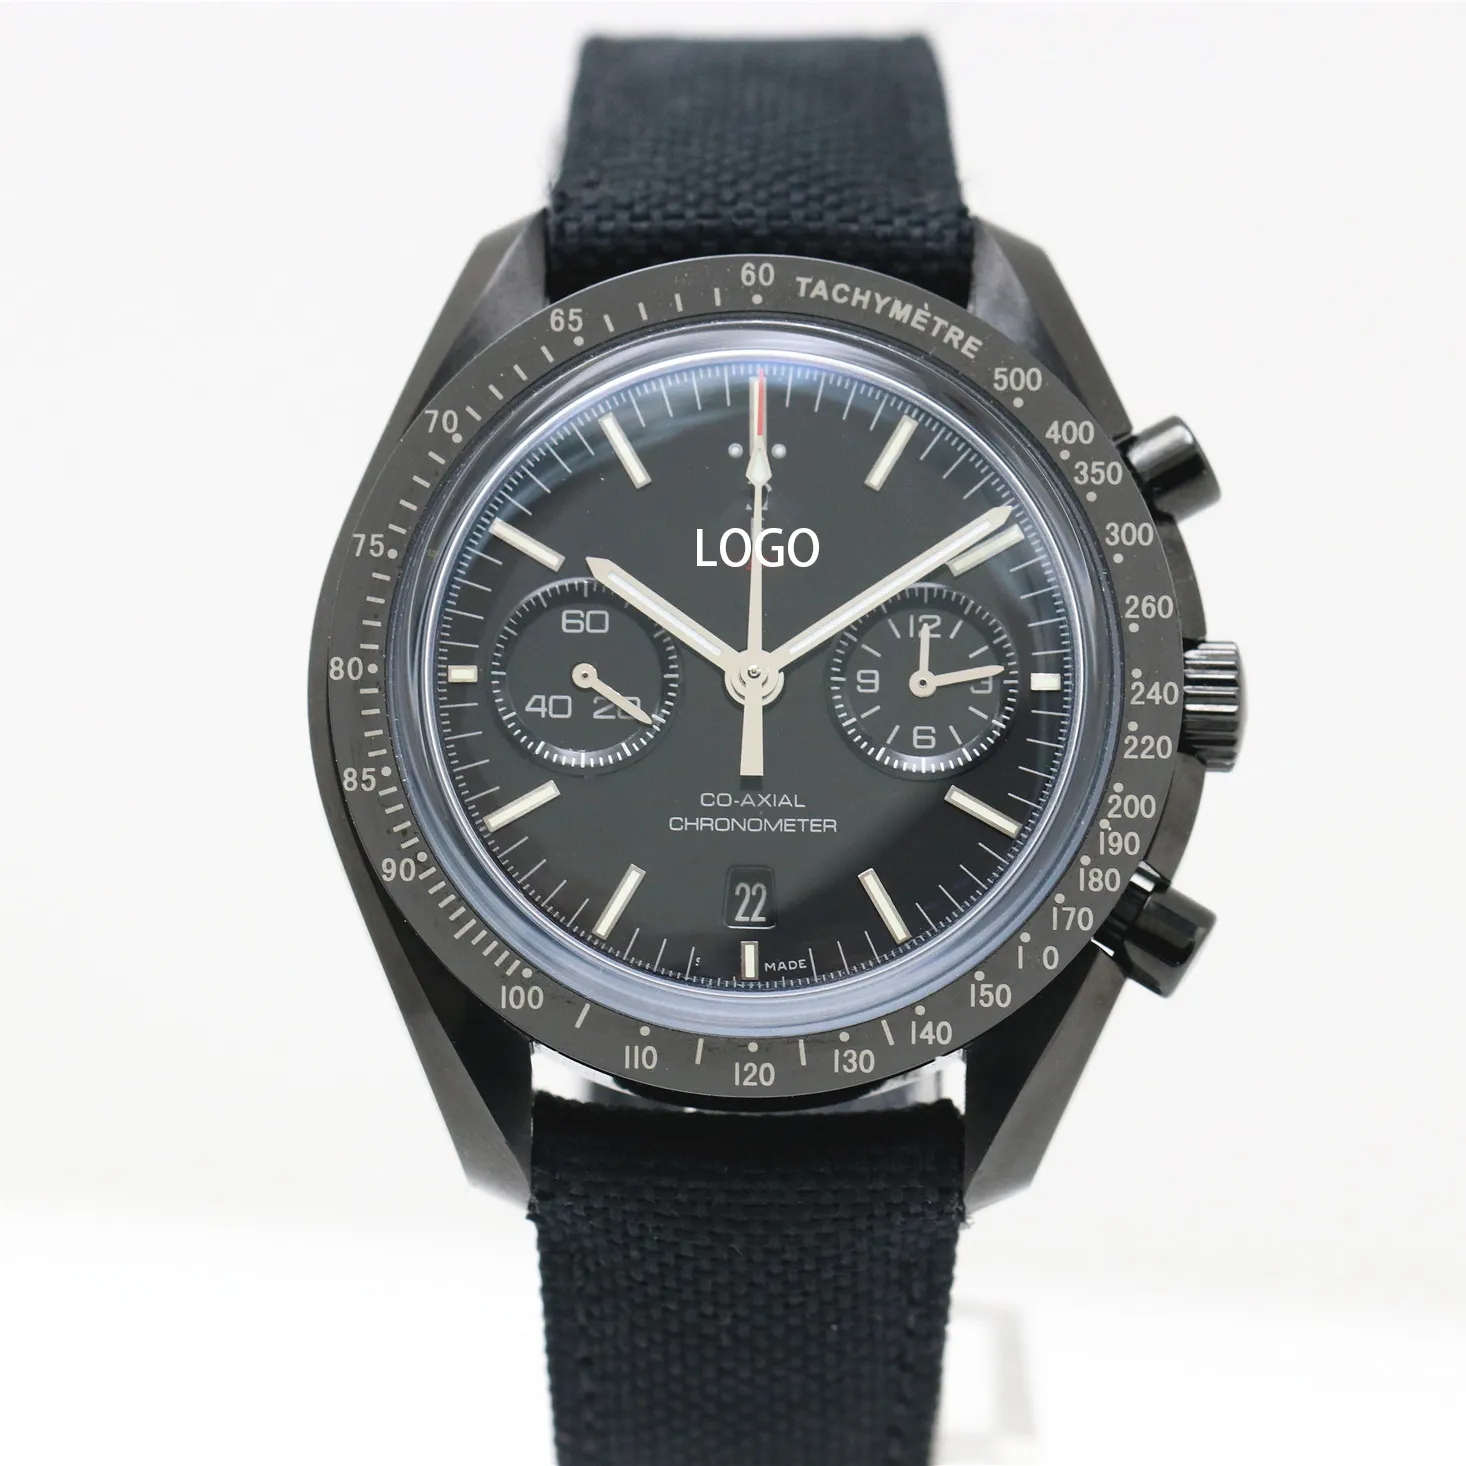 Noob watch om watch 9300 movement chronograph black ceramic automatic mechanical watch